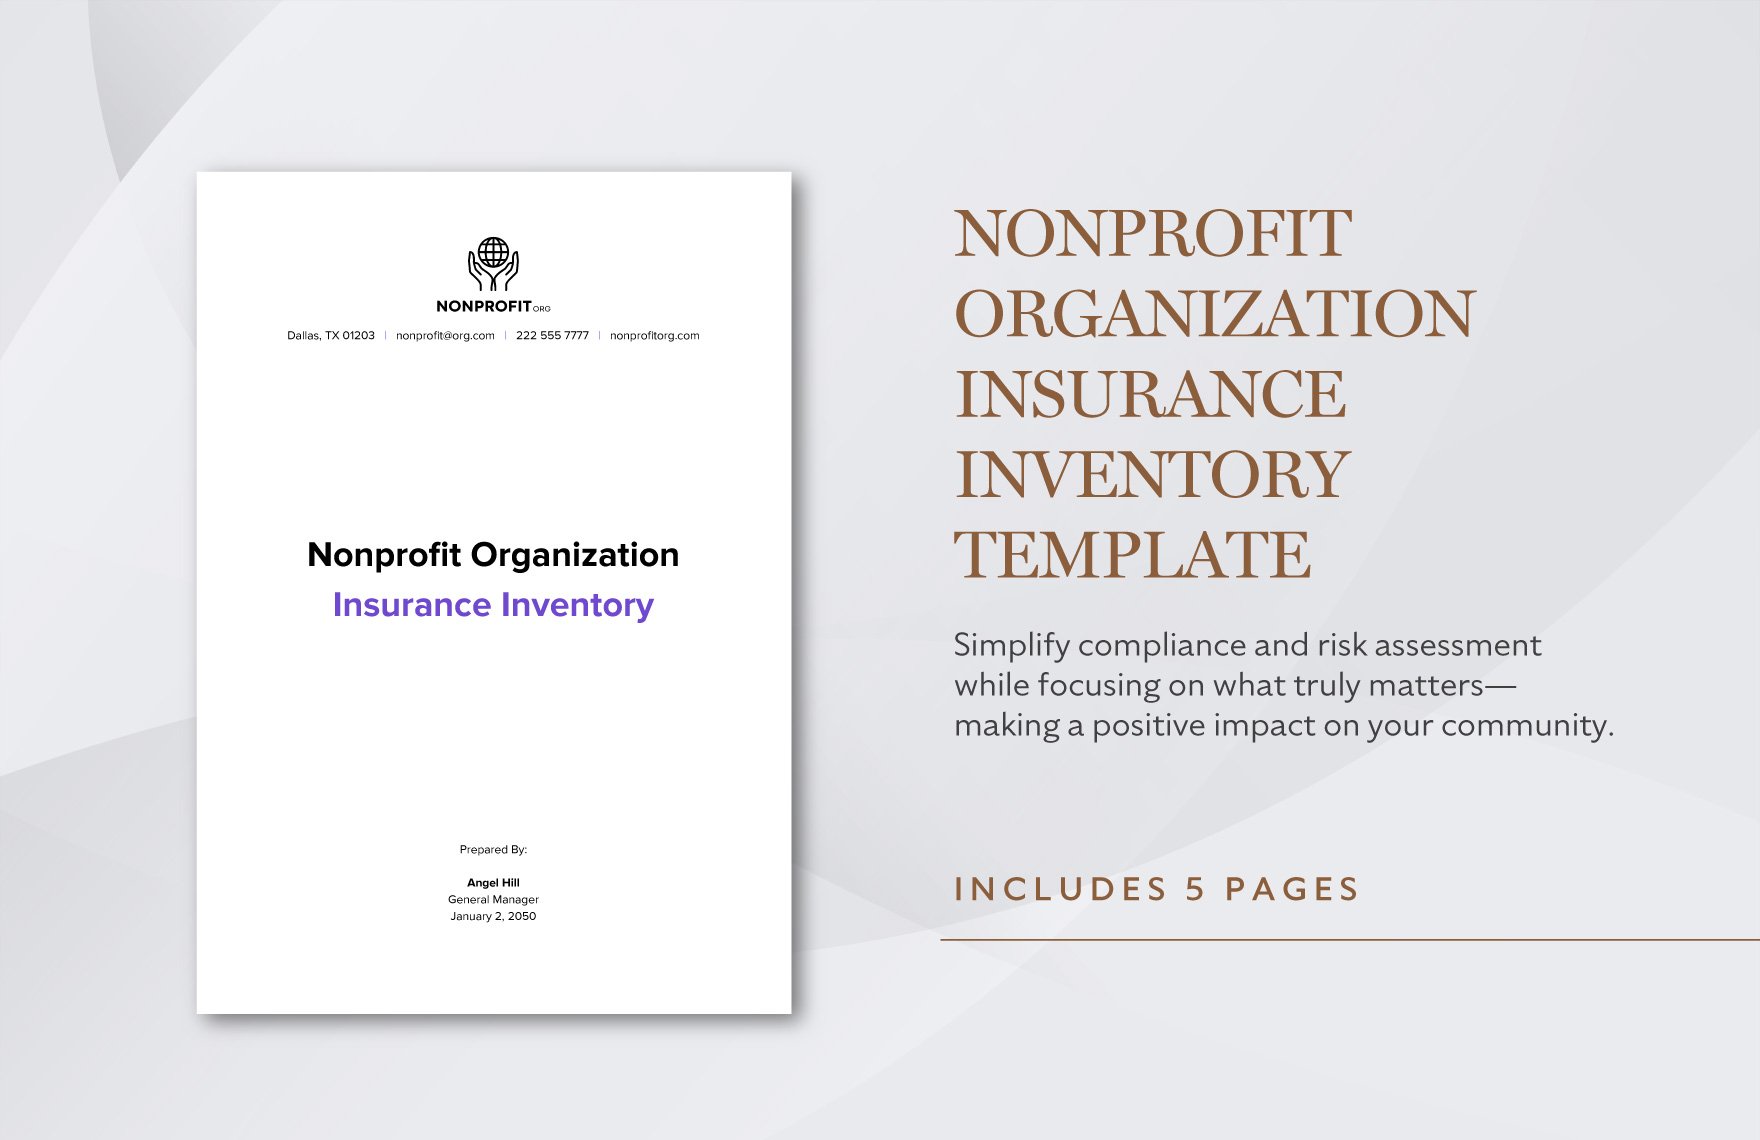 Nonprofit Organization Insurance Inventory Template in Word, Google Docs, PDF